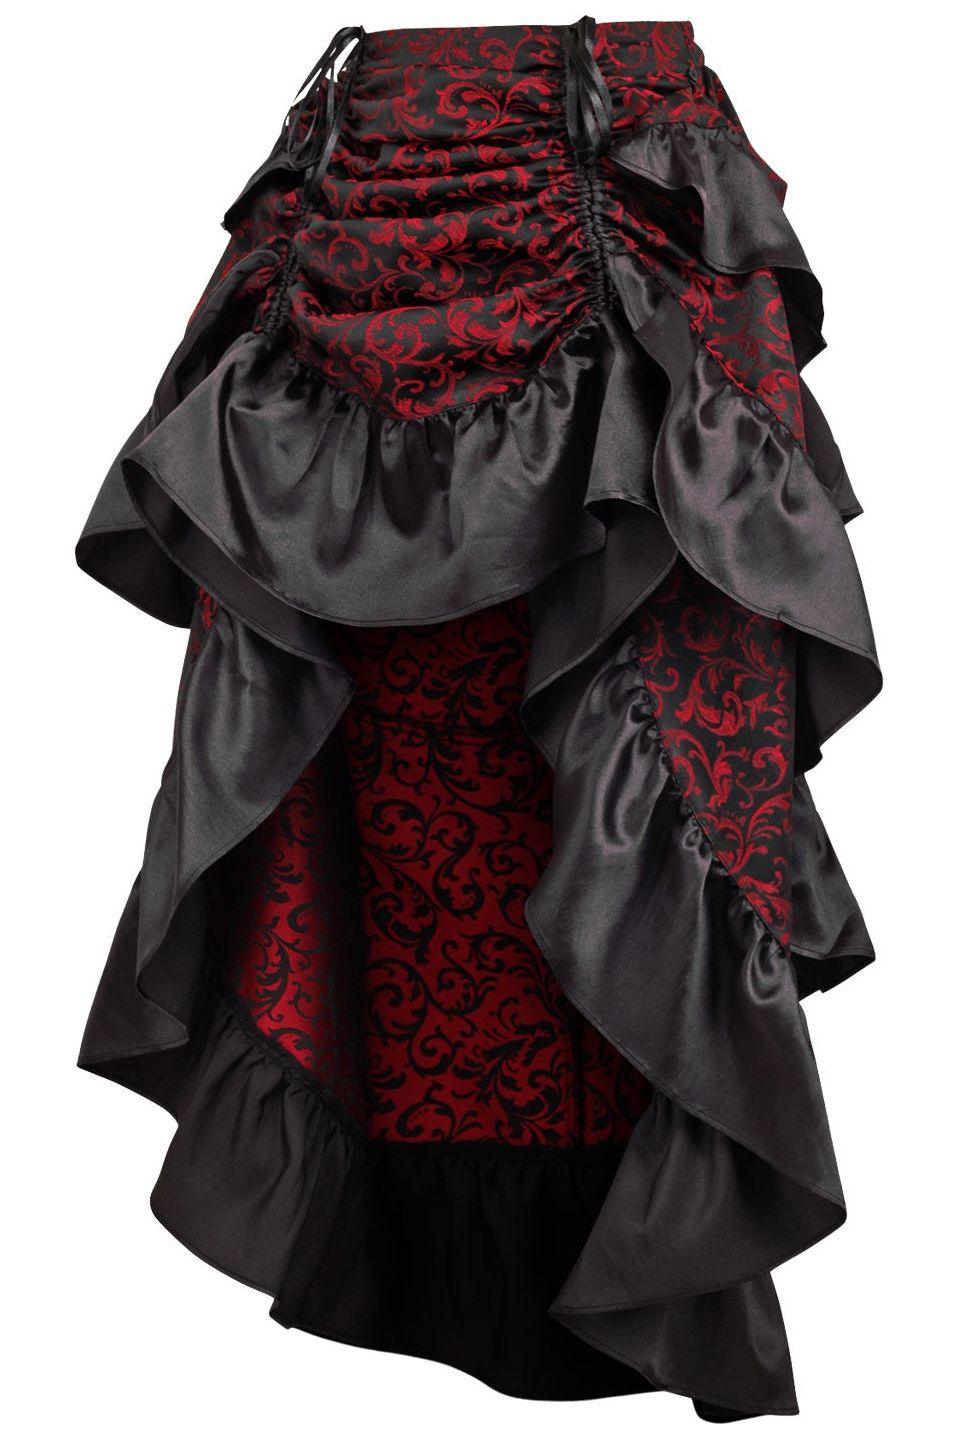 Red/Black Brocade Adjustable High Low Bustle Skirt - AMIClubwear